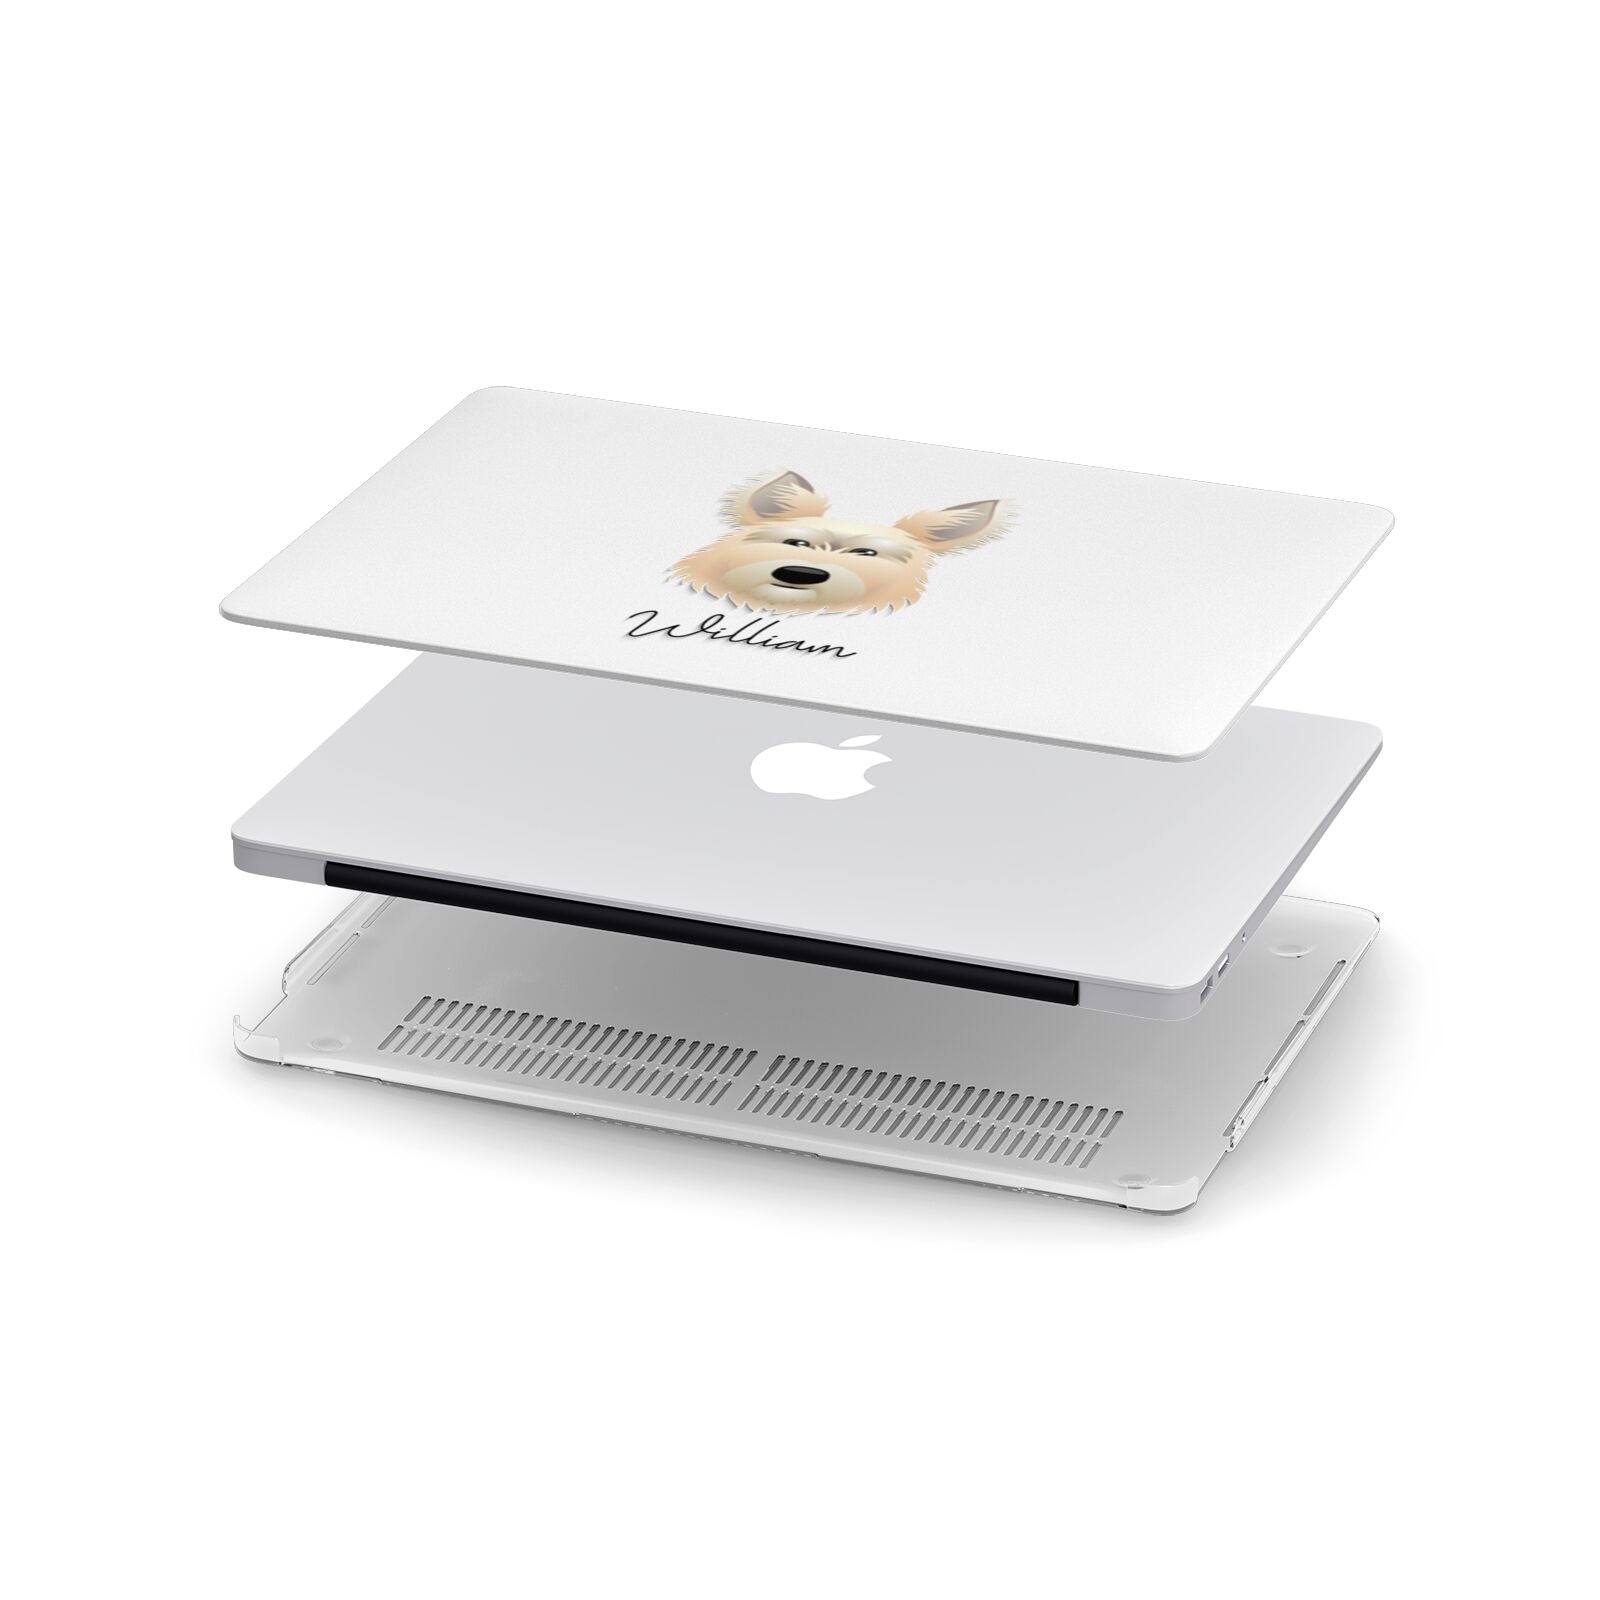 Picardy Sheepdog Personalised Apple MacBook Case in Detail